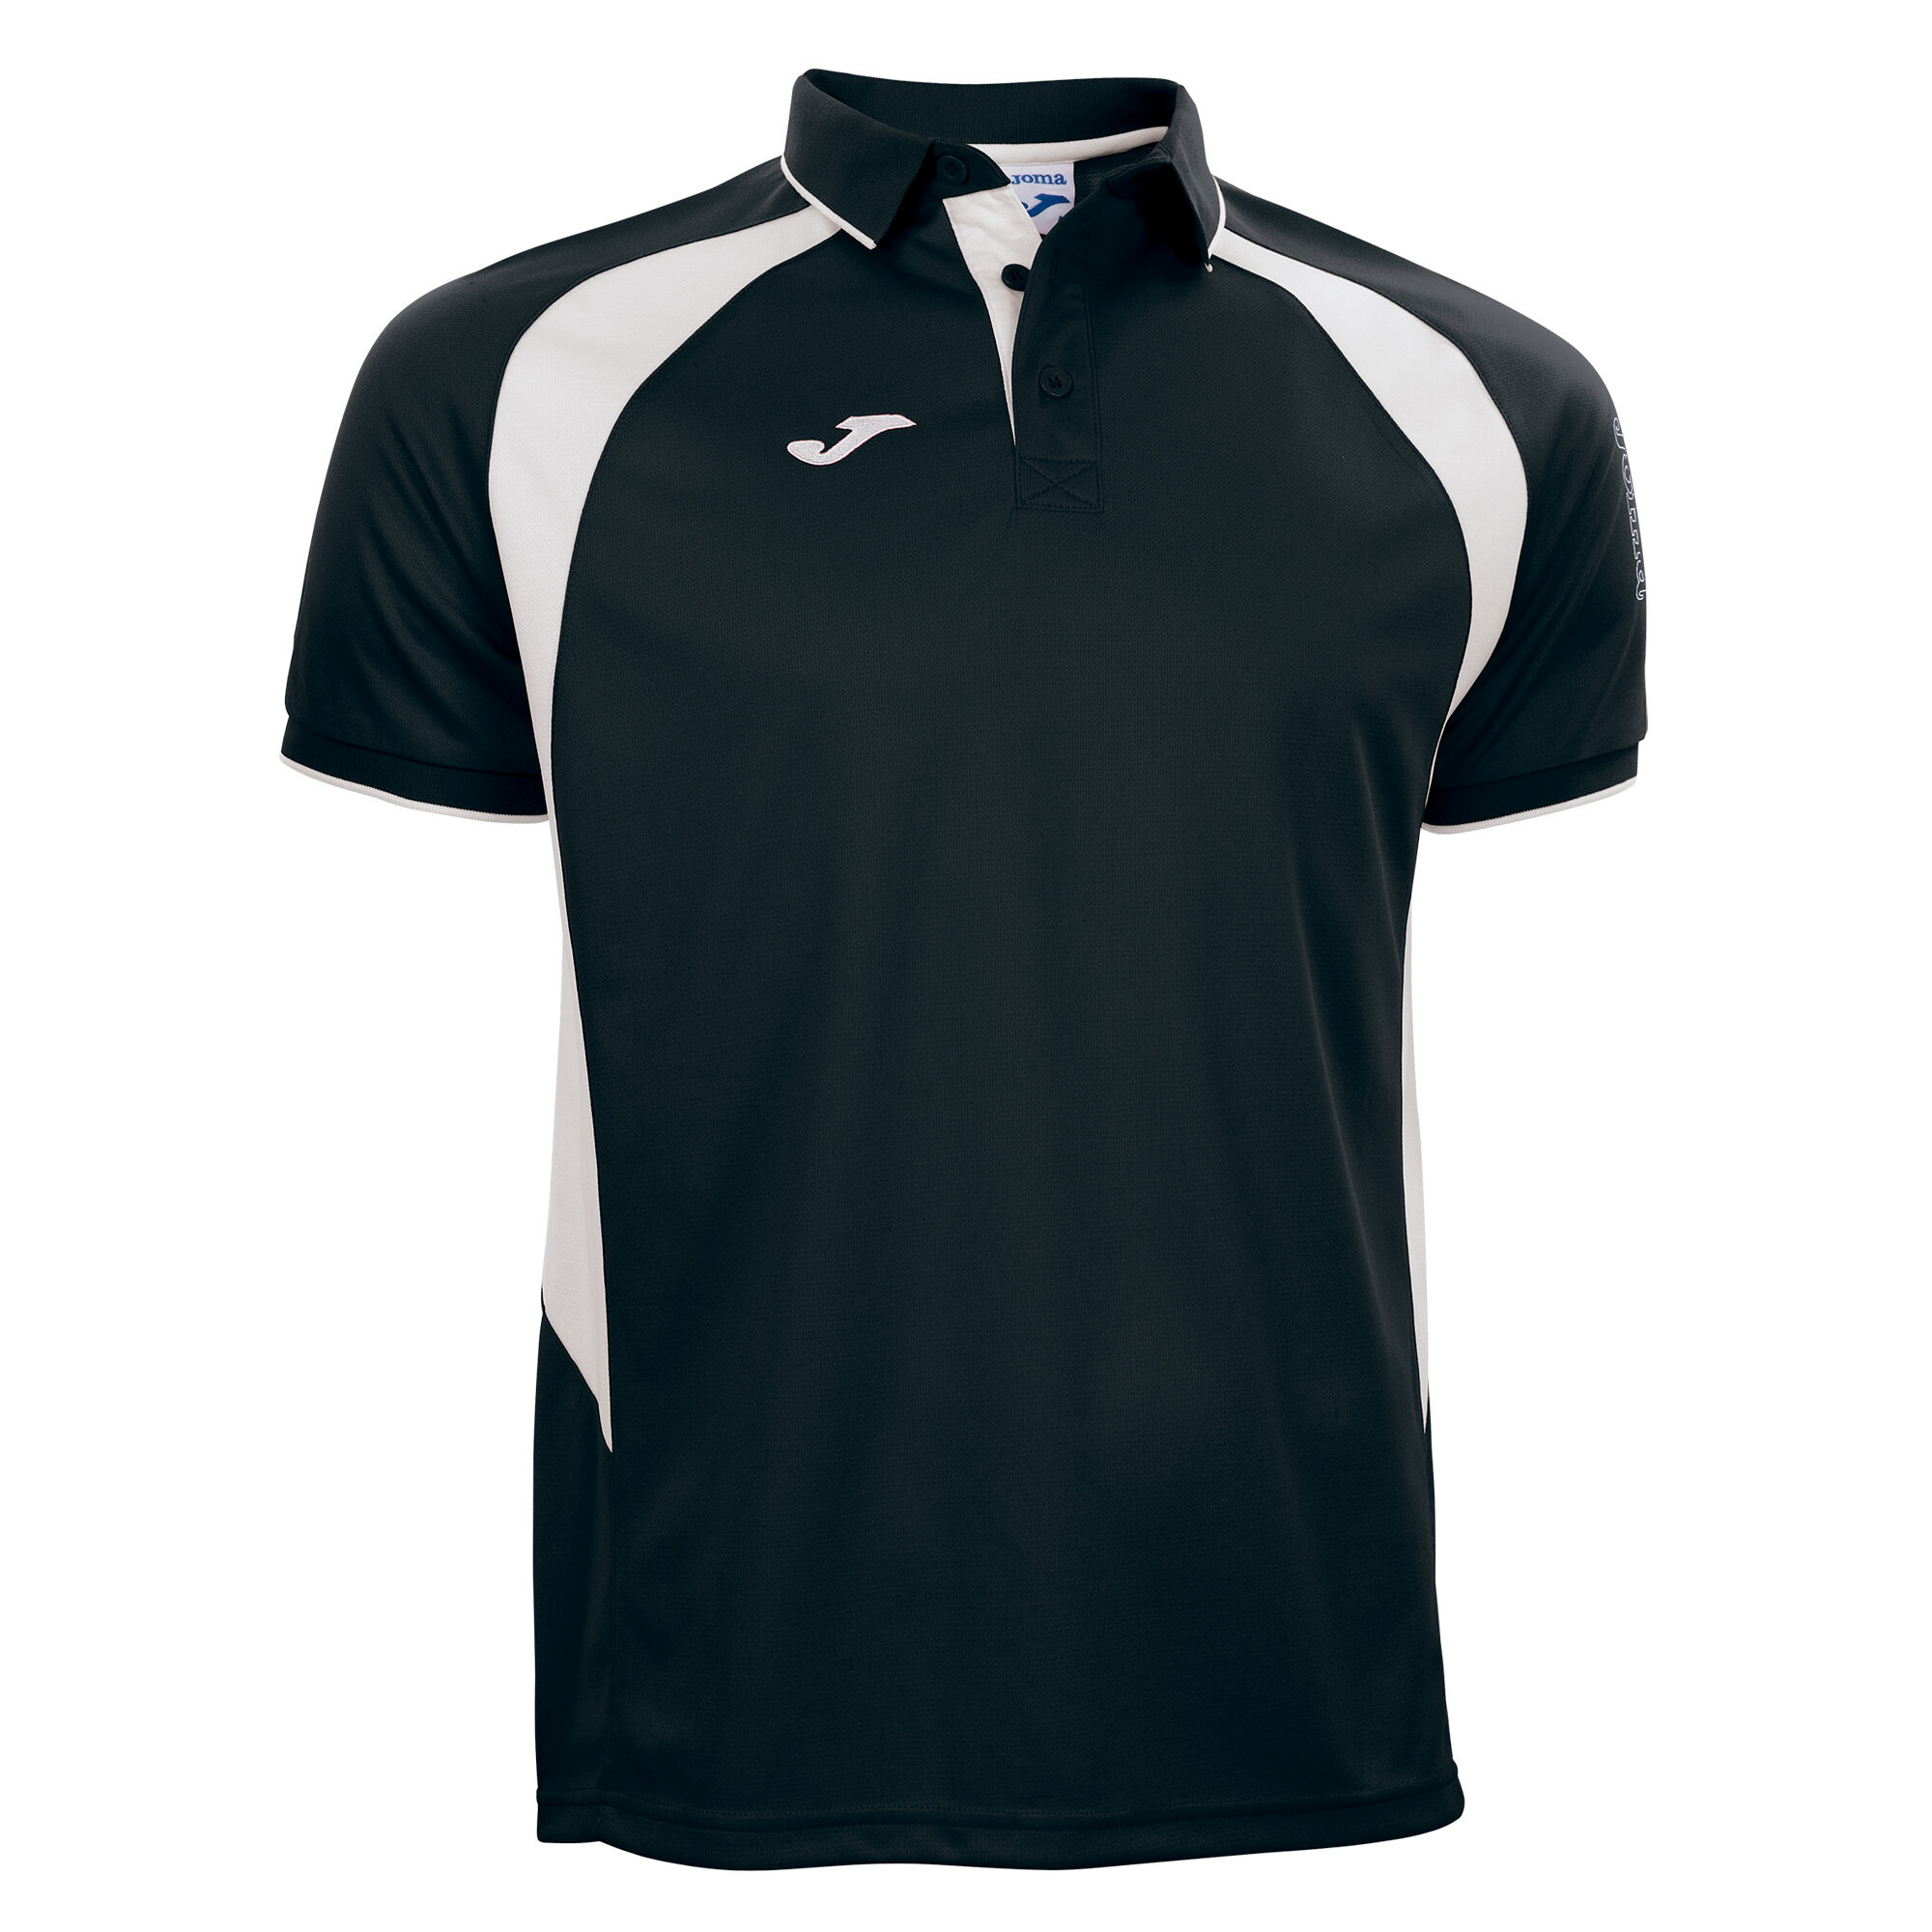 Polo shirt short-sleeve man Championship III black white